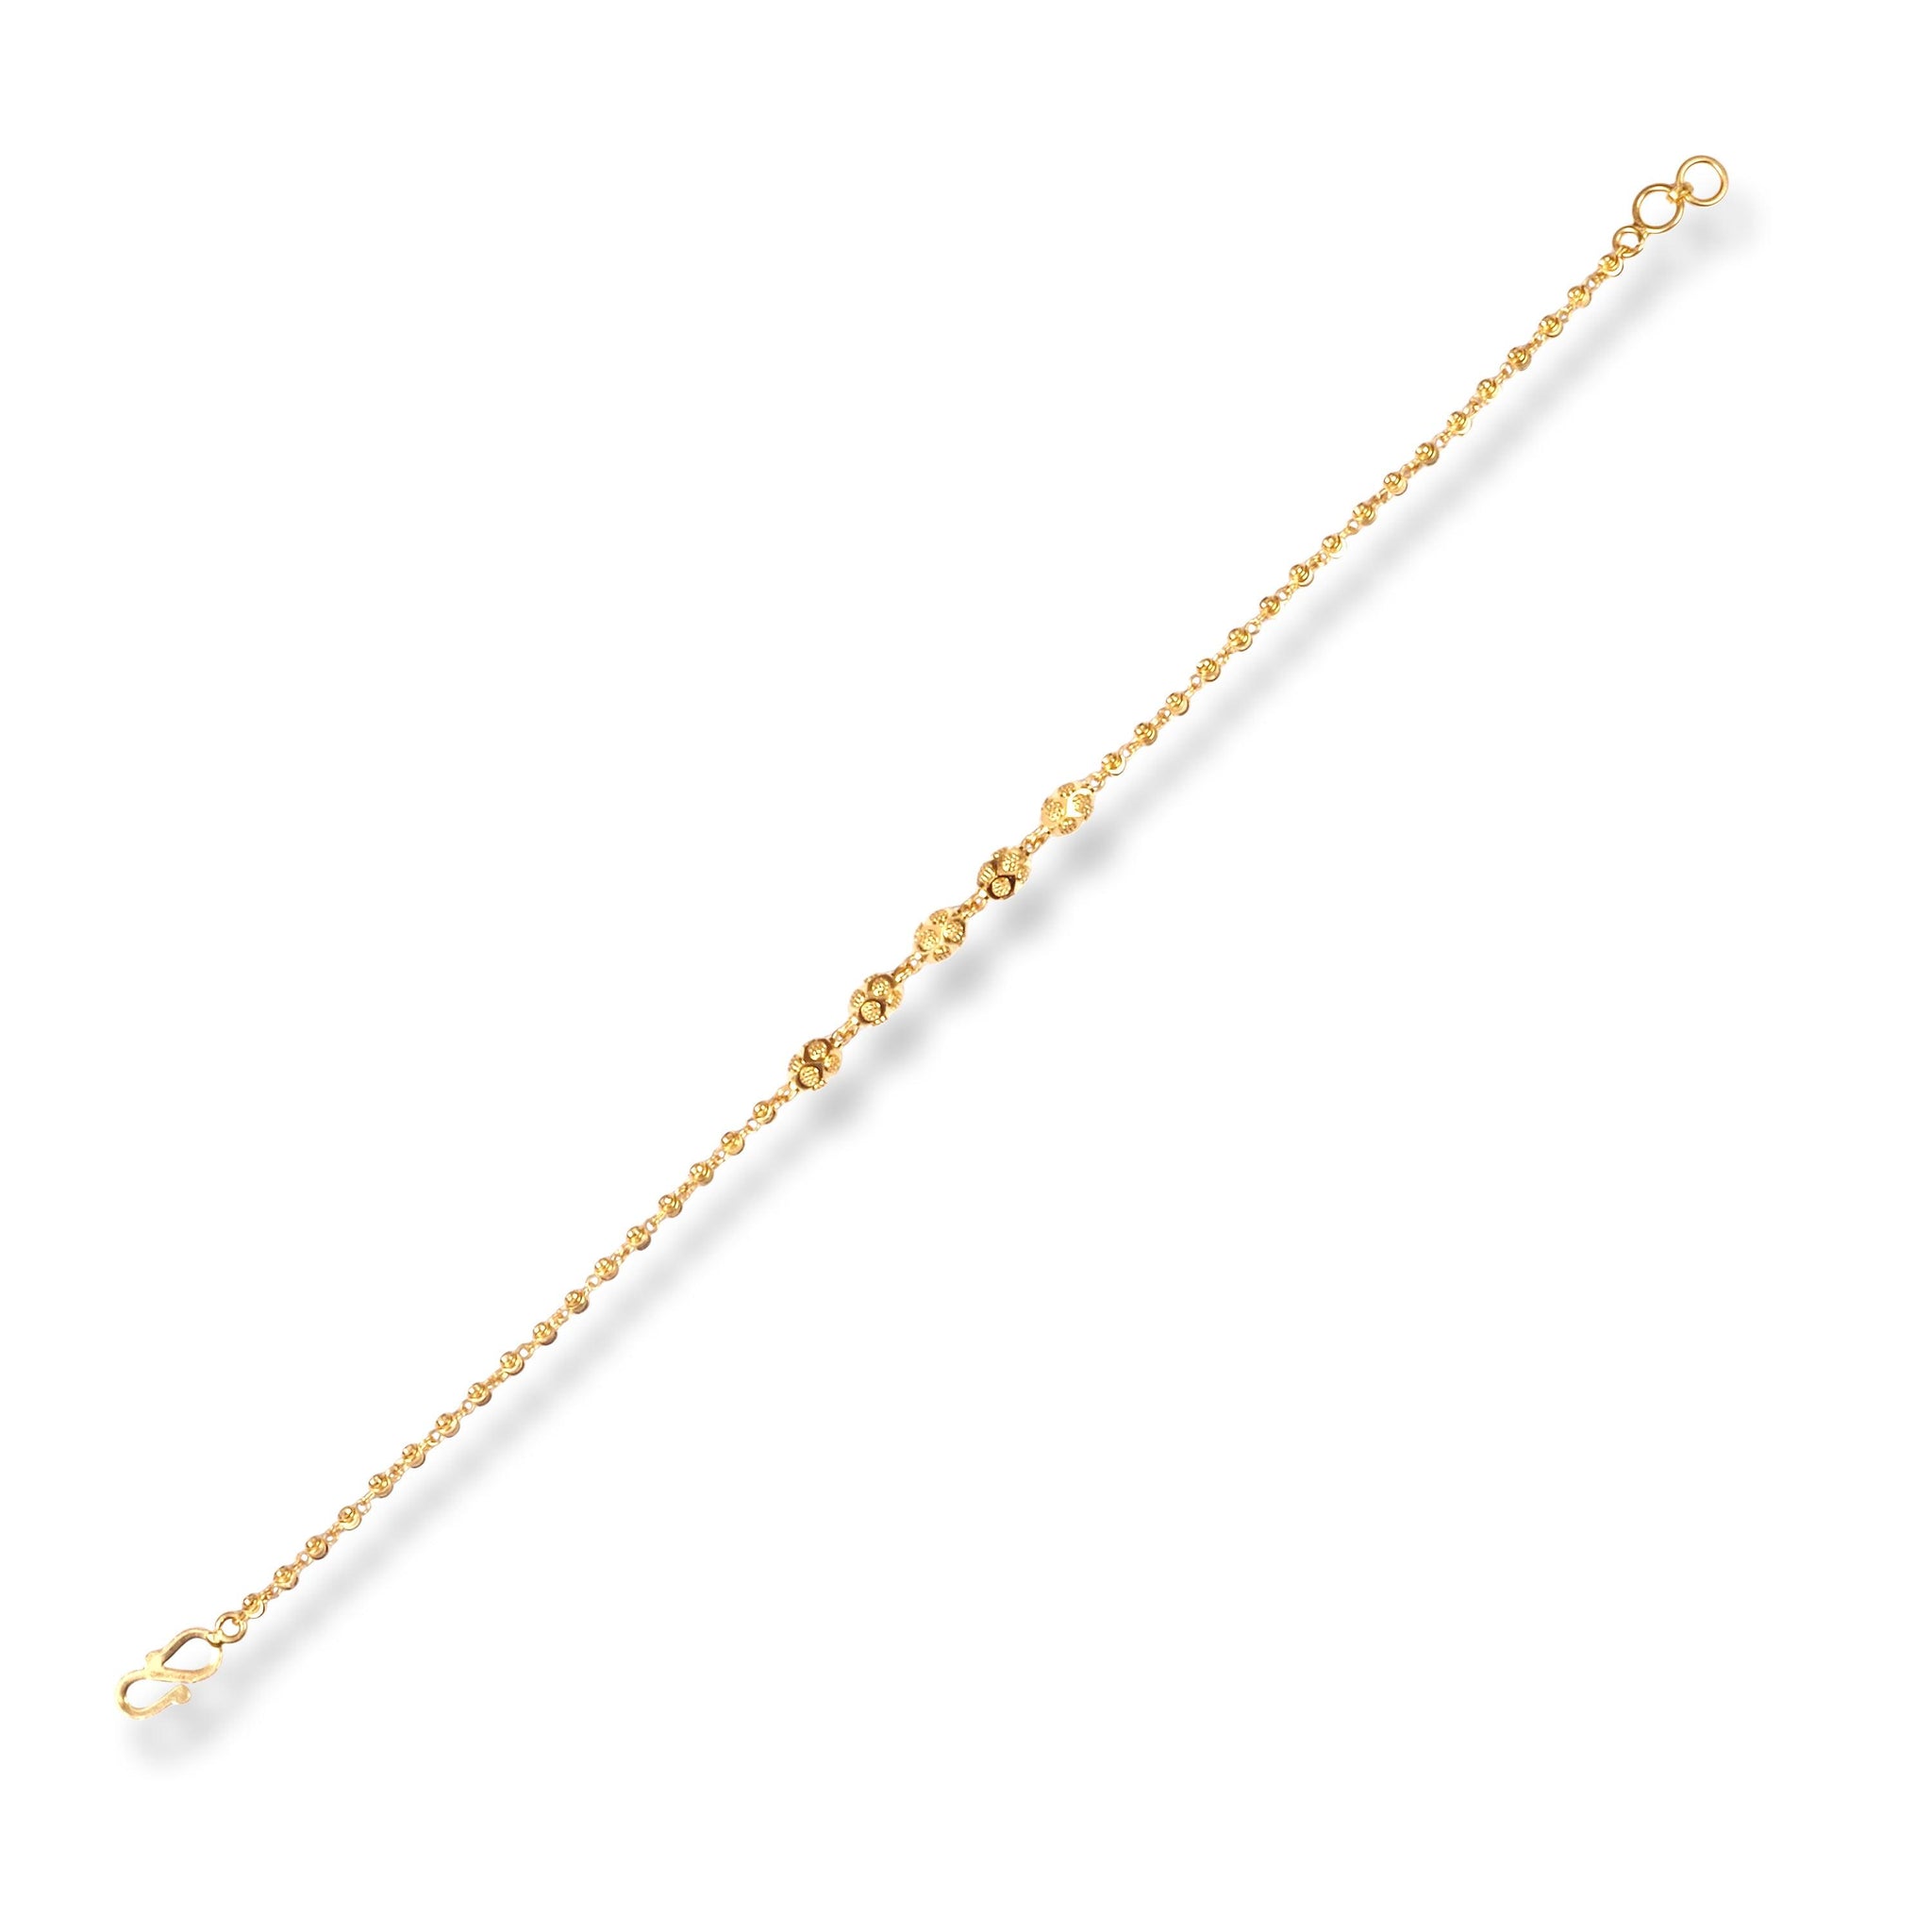 22ct Gold Ladies Bracelet with Five Diamond Cut Beads & S Clasp LBR-7156